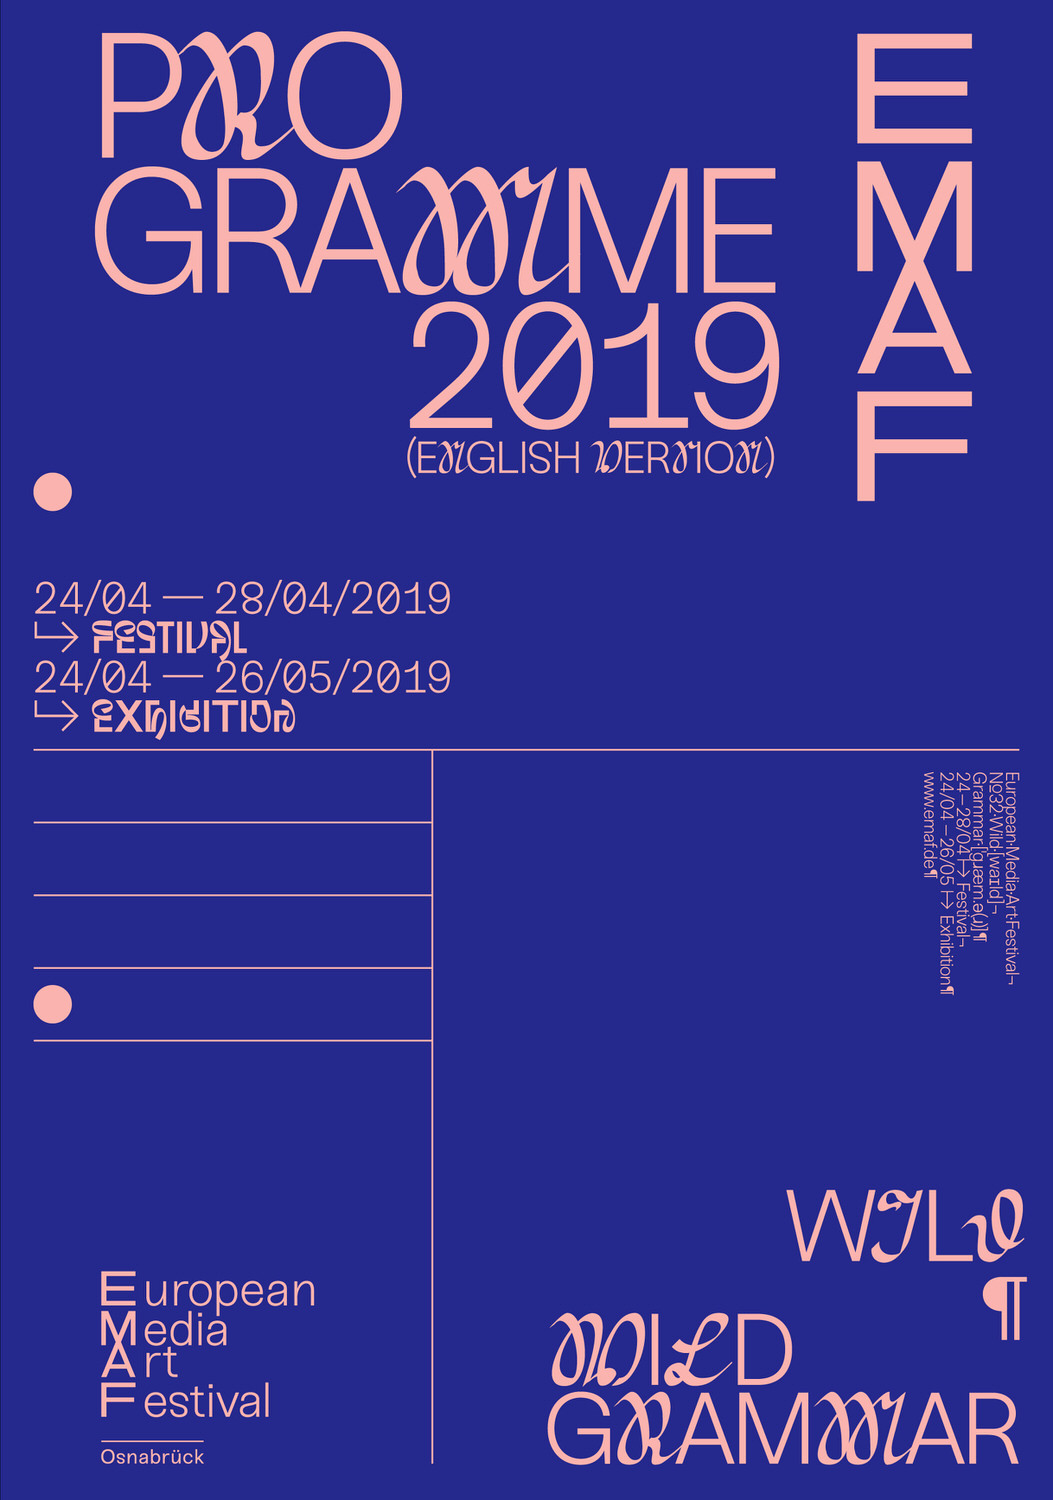 European Media Arts Festival: Wild Grammar